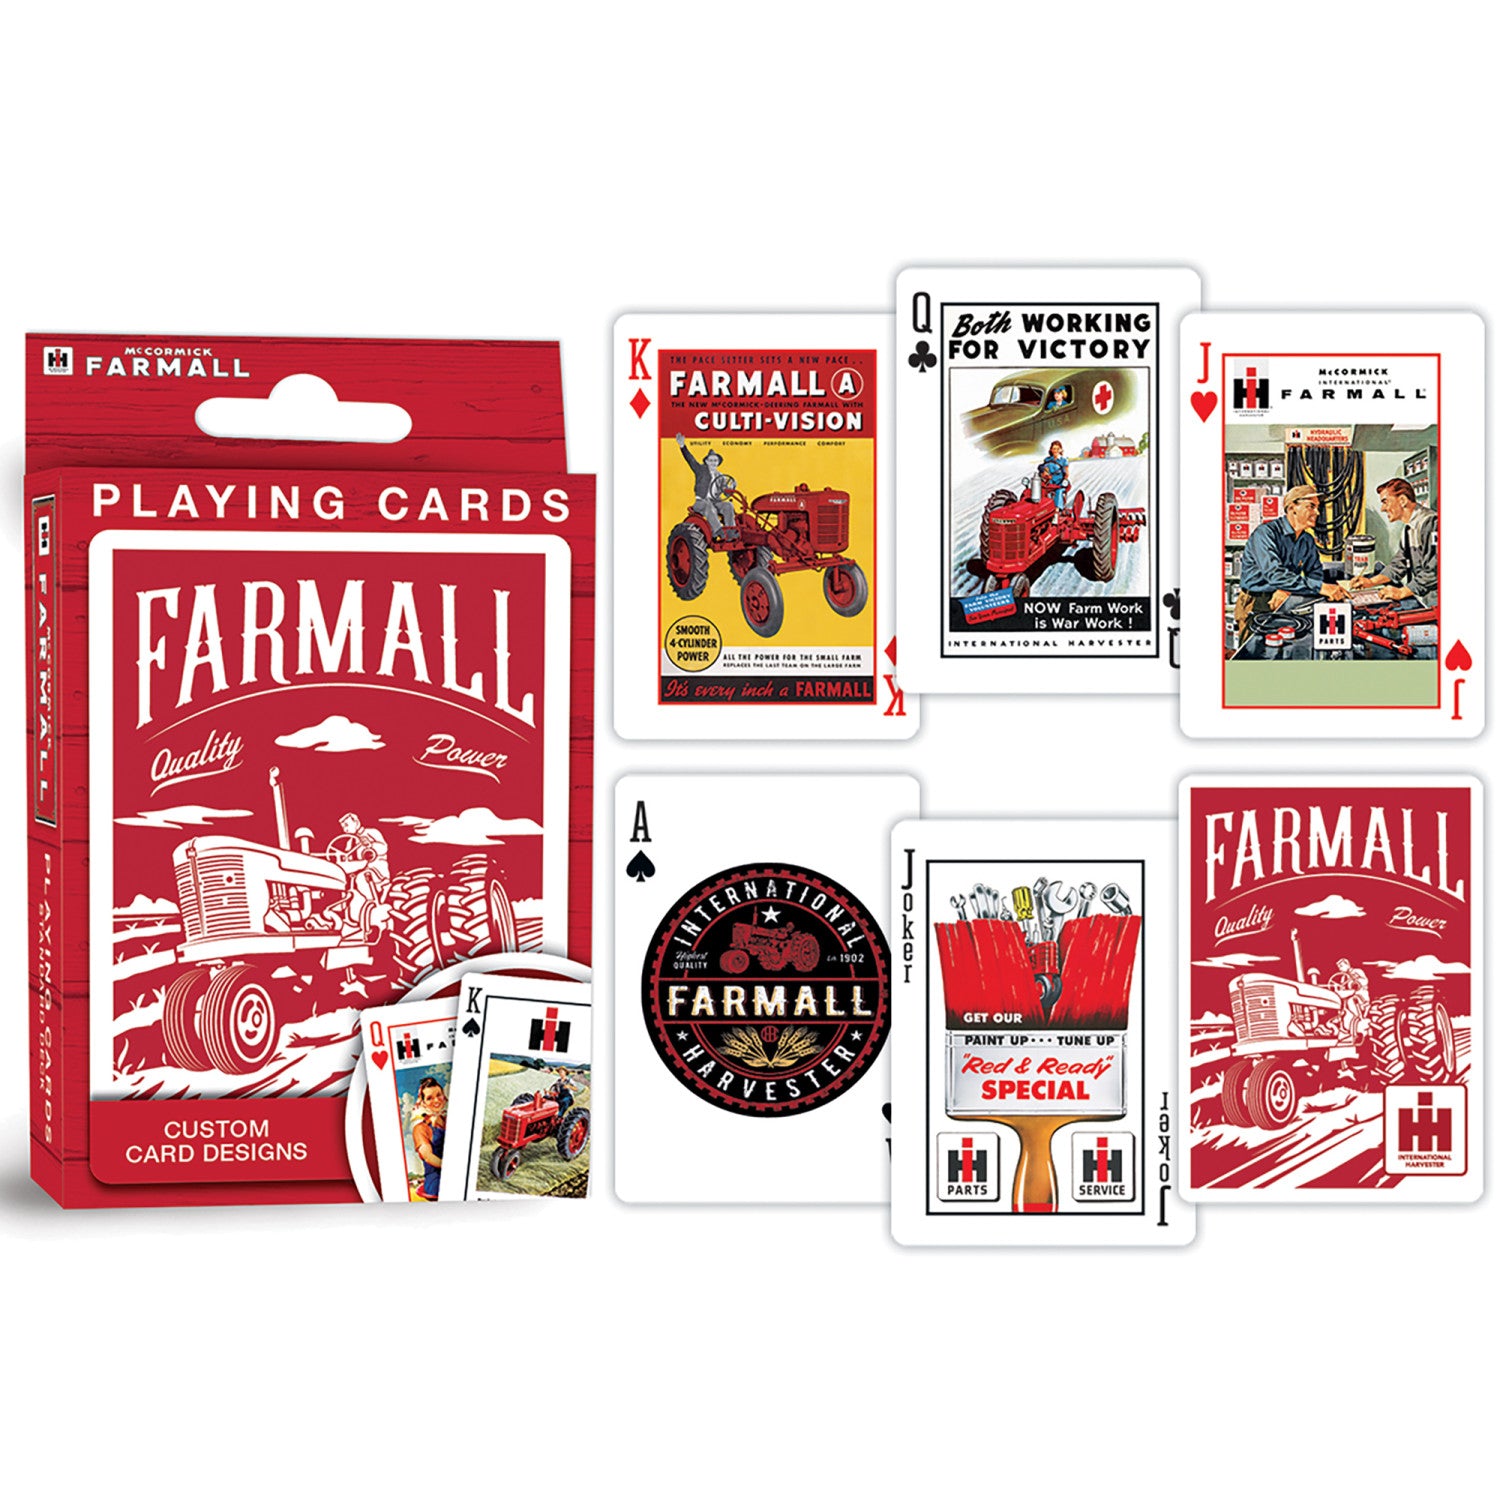 Case IH - Farmall Playing Cards - 54 Card Deck